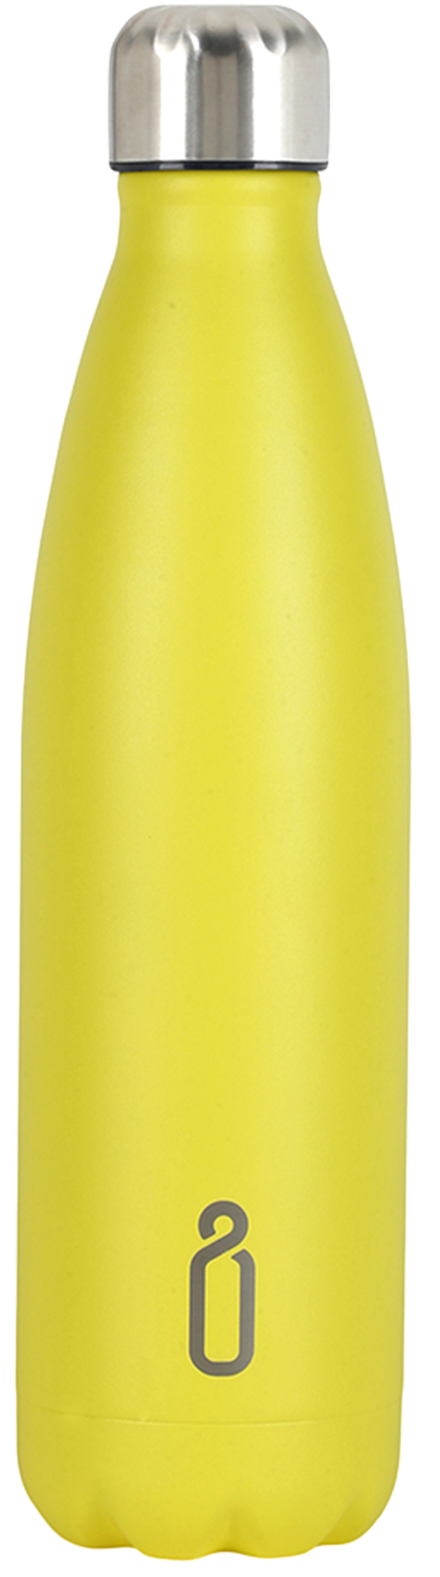 Neon Yellow Reusable Water Bottle 750ml